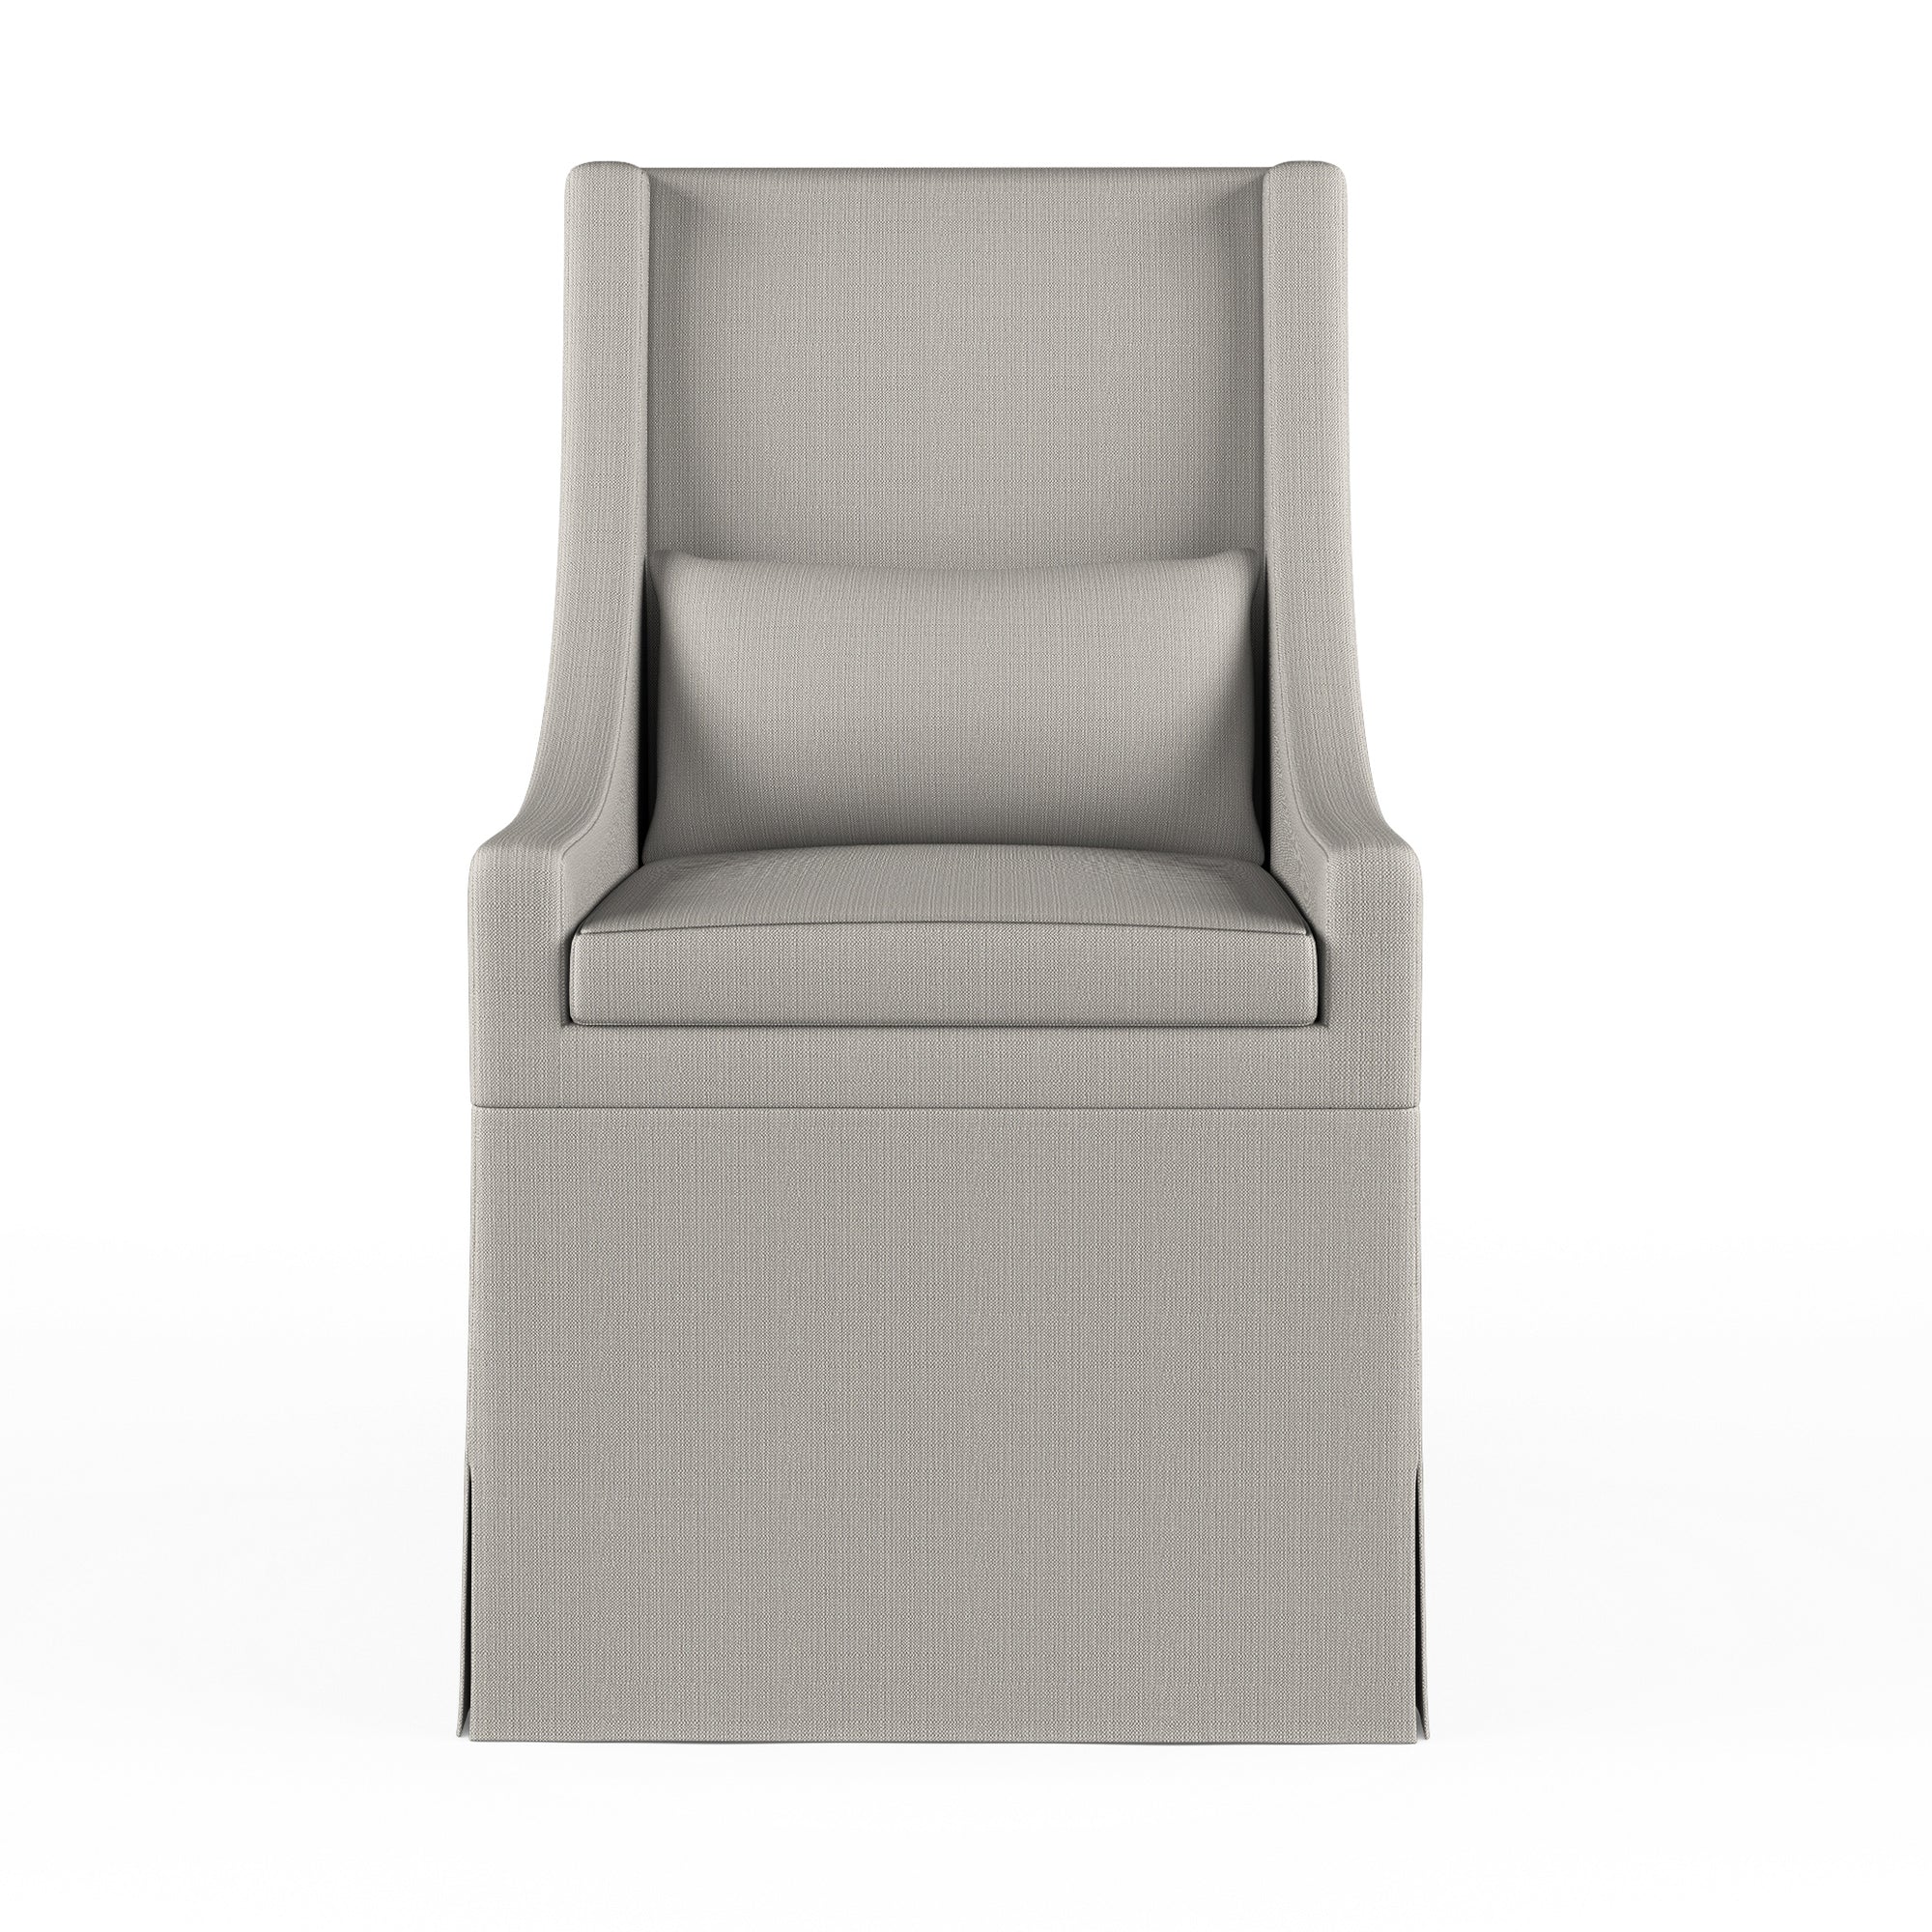 Serena Dining Chair - Silver Streak Box Weave Linen